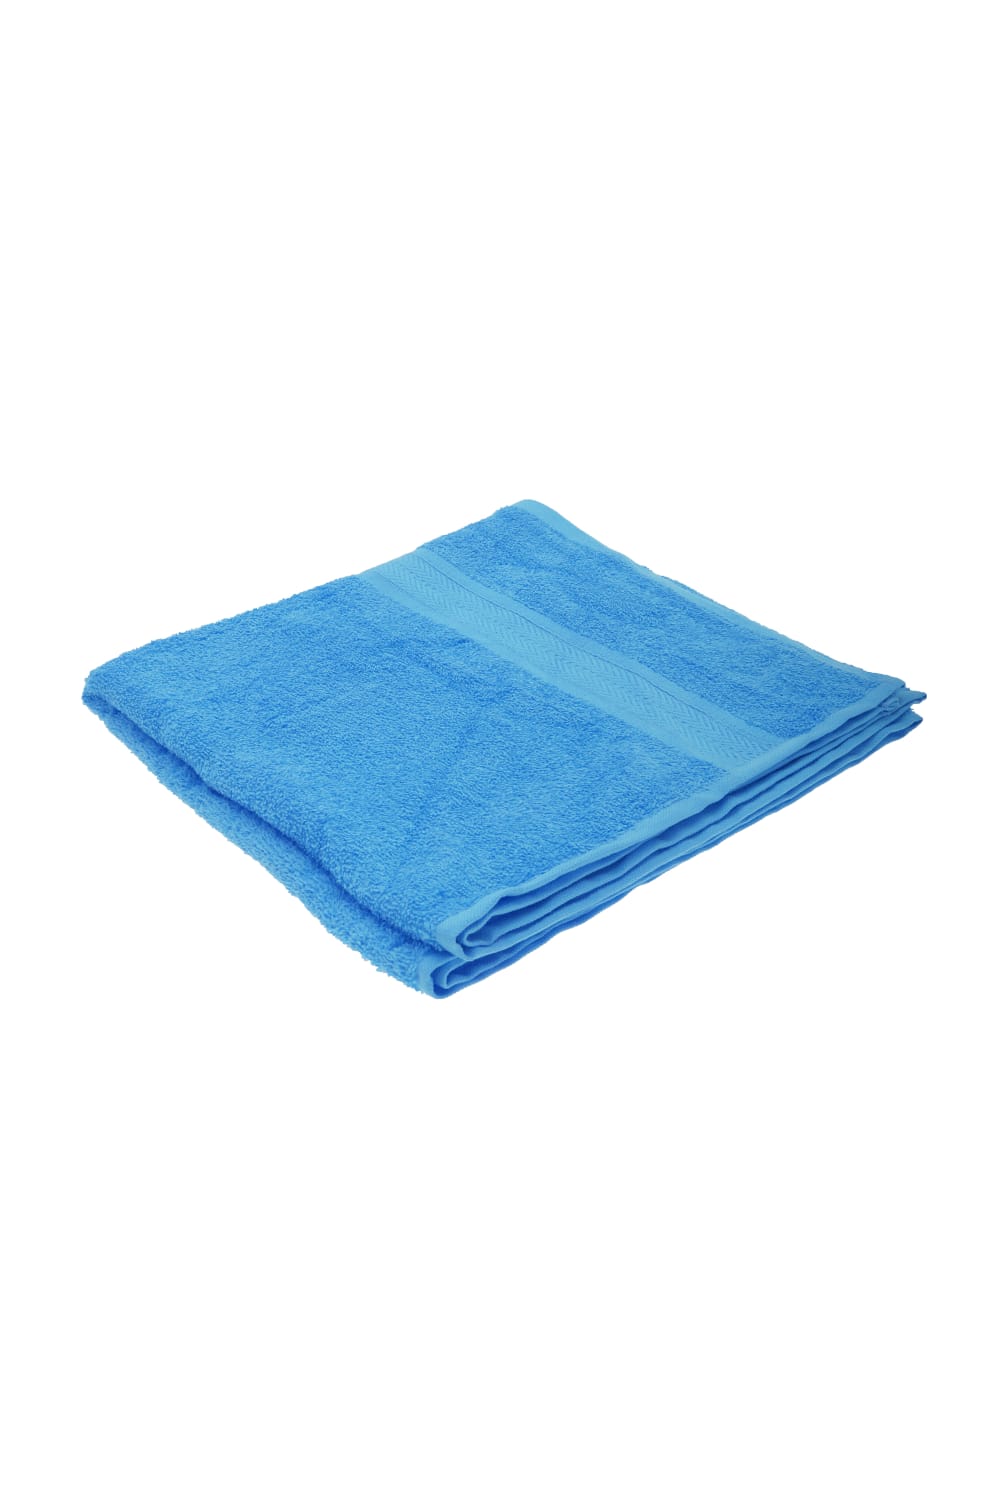 Jassz Plain Bath Towel (Aqua) (One Size)